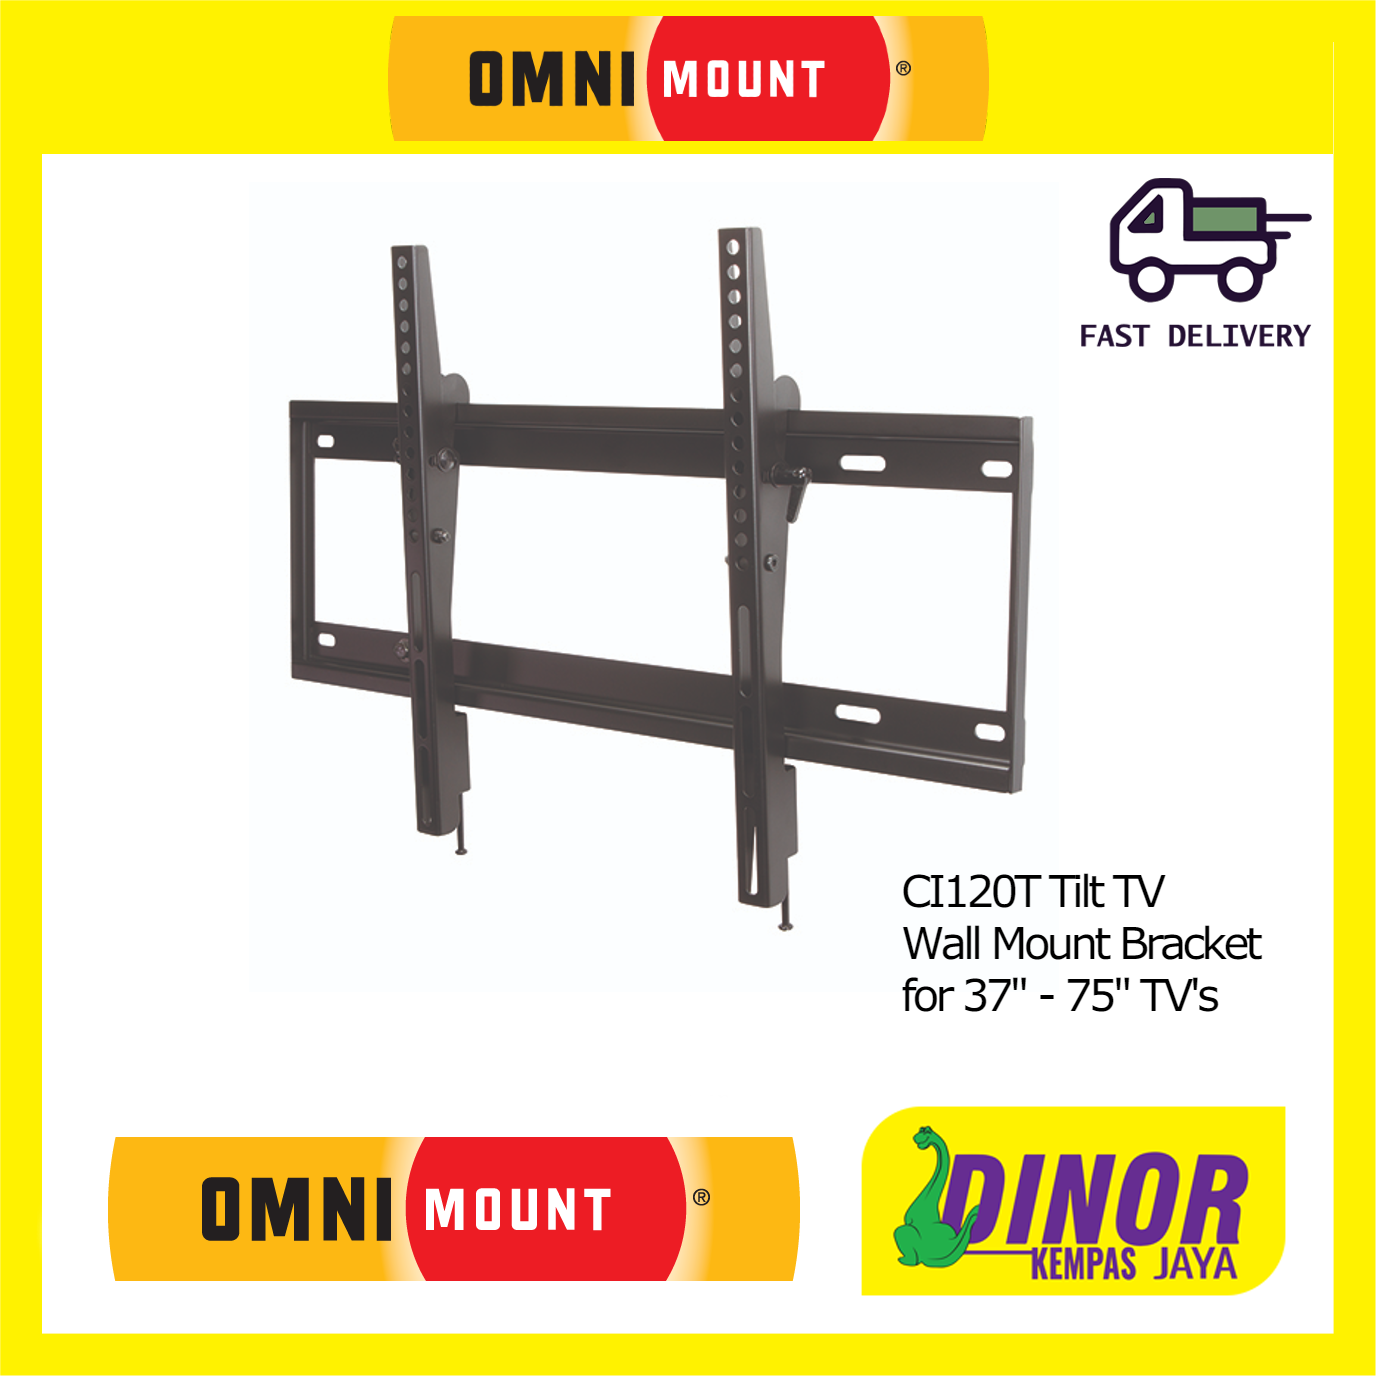 Omnimount CI120T Tilt TV Wall Mount Bracket for 37" - 75" TV's CI-120T